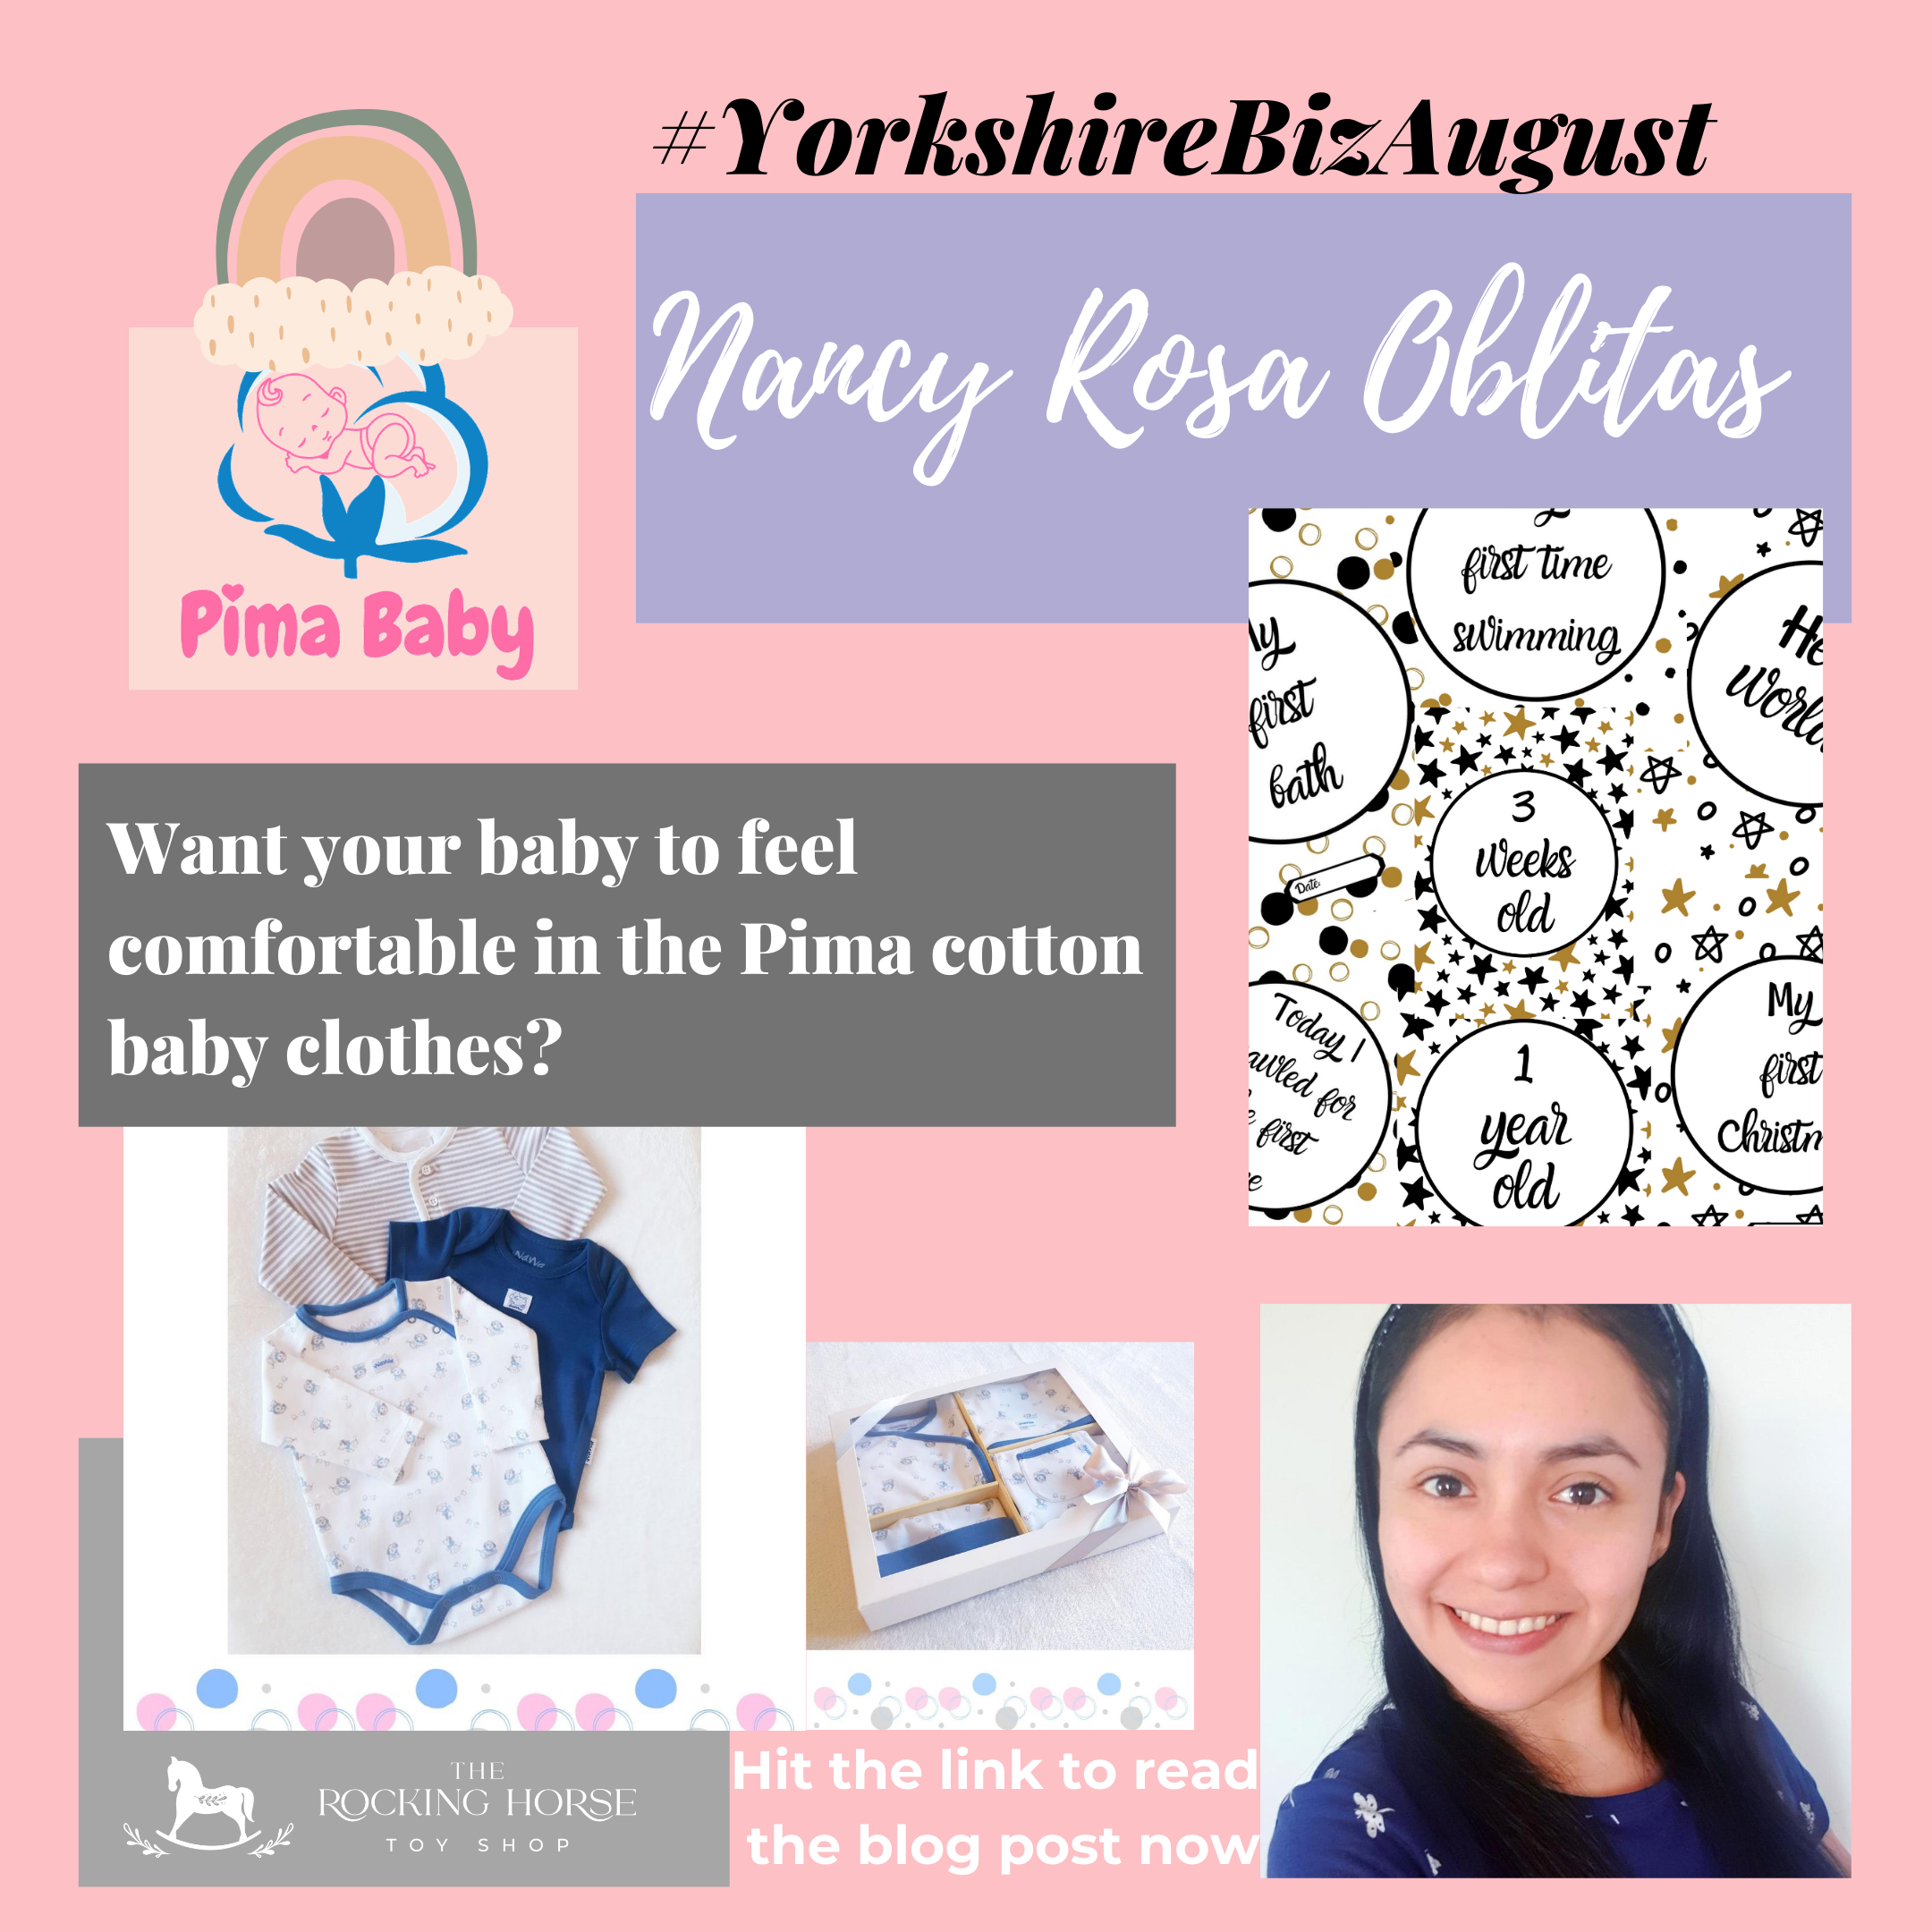 Yorkshire Biz August 10 - Nancy Rosa Oblitas - Pima Baby